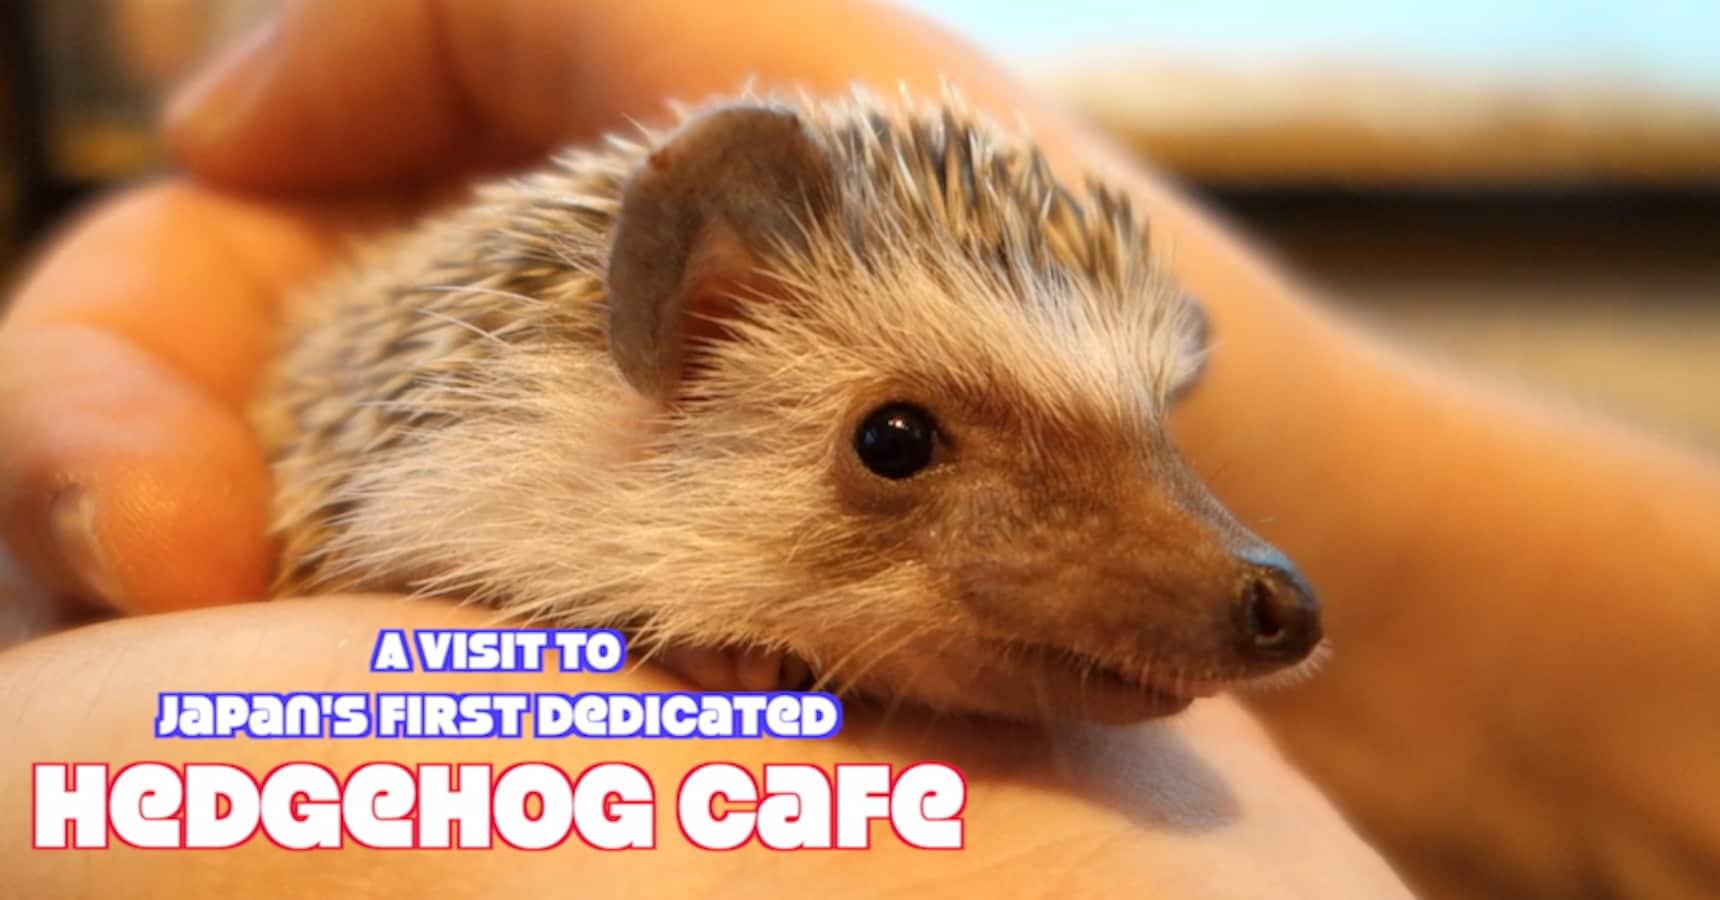 Japan's First Hedgehog Café has Arrived!